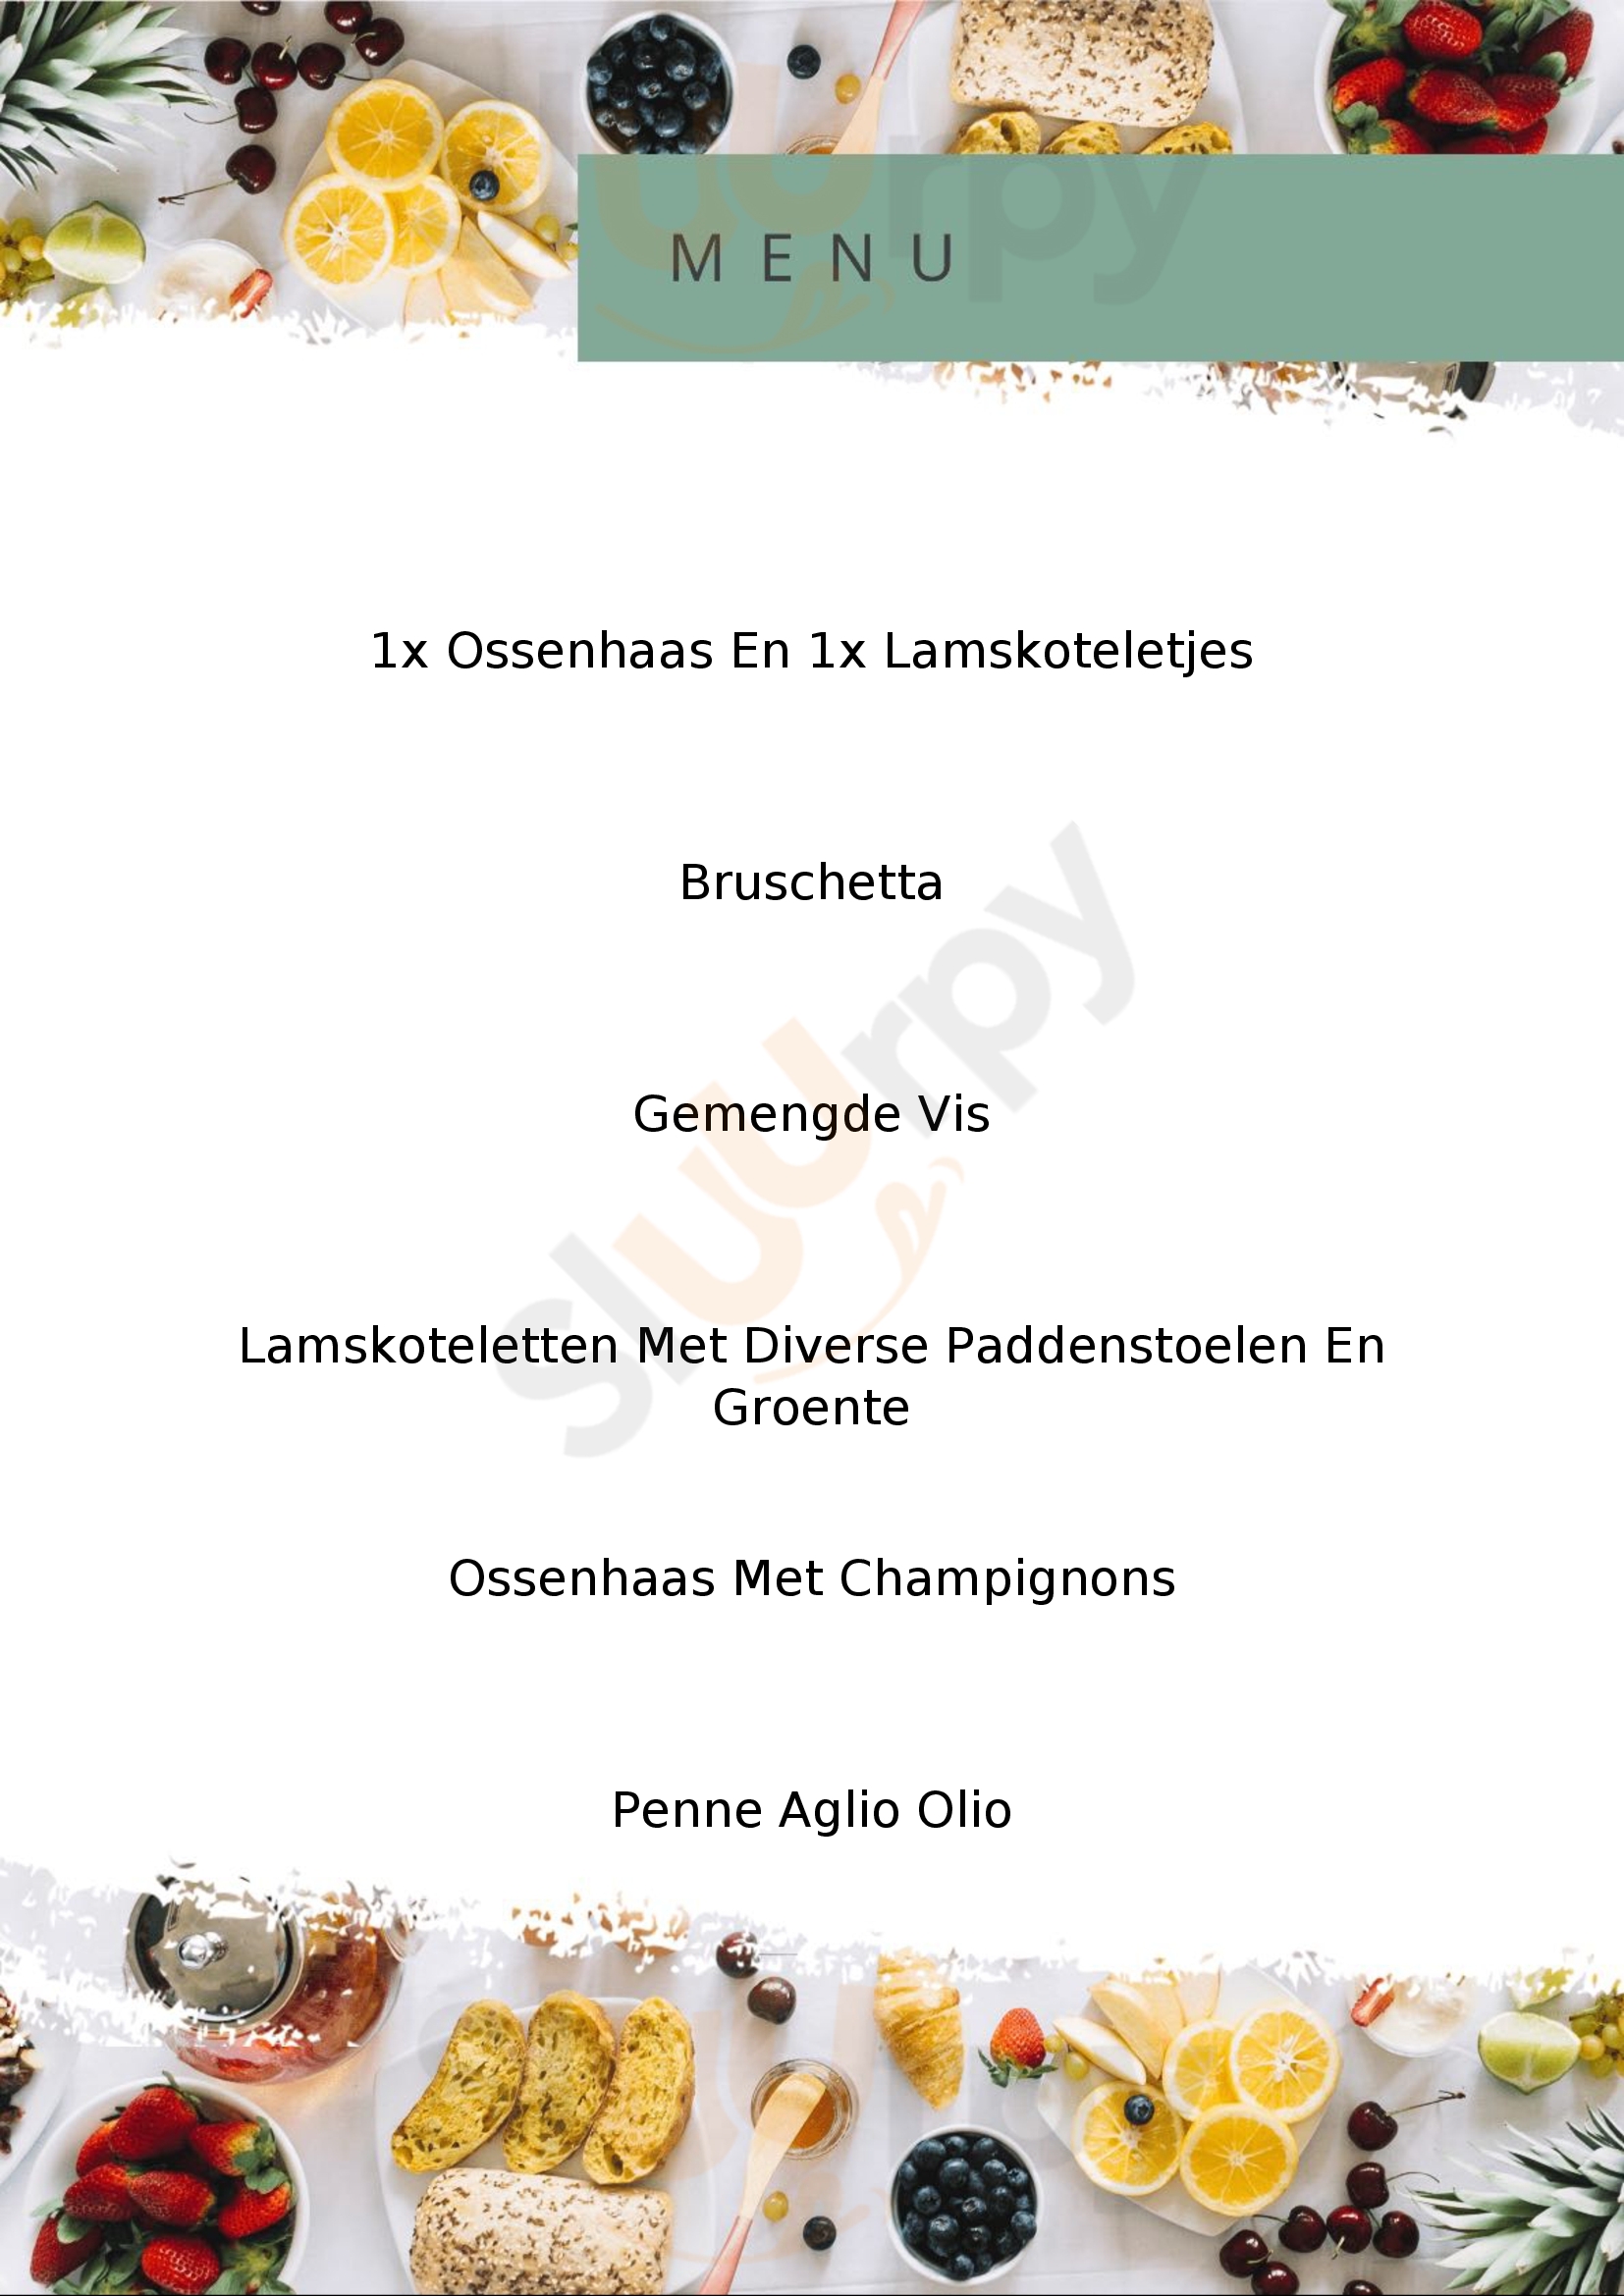 Gio's Cucina Maastricht Menu - 1